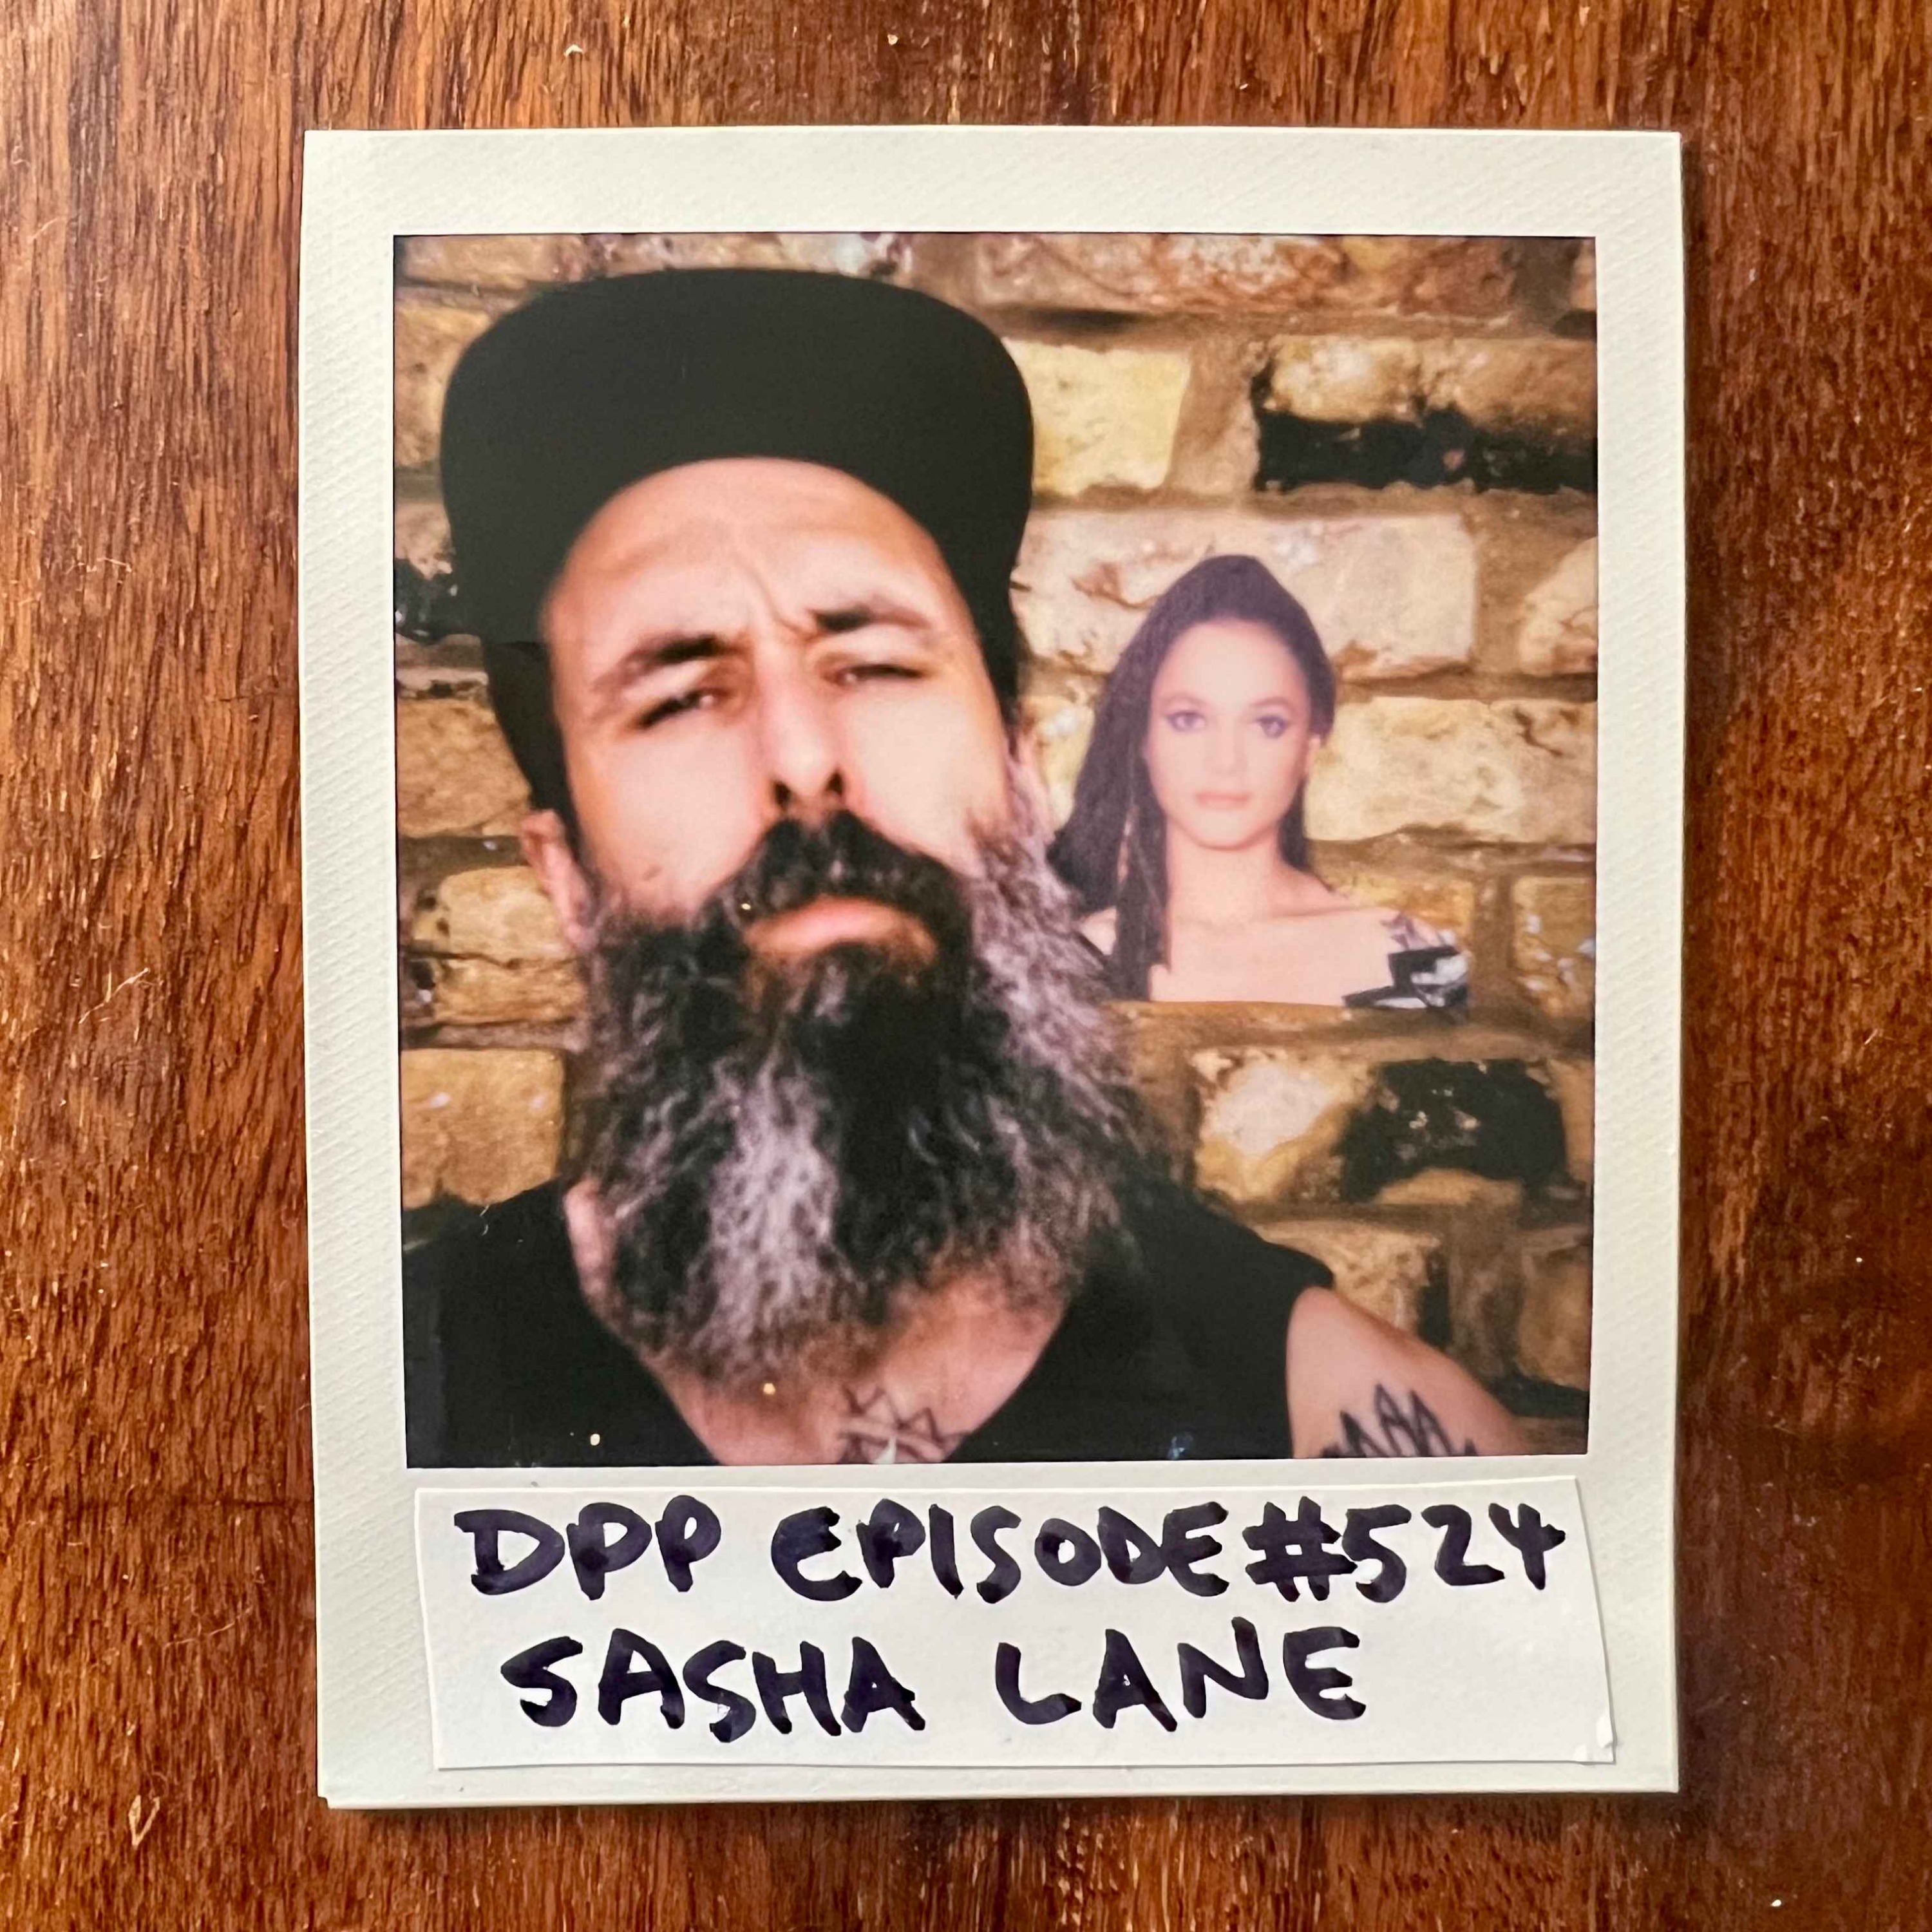 Sasha Lane • Distraction Pieces Podcast with Scroobius Pip #524